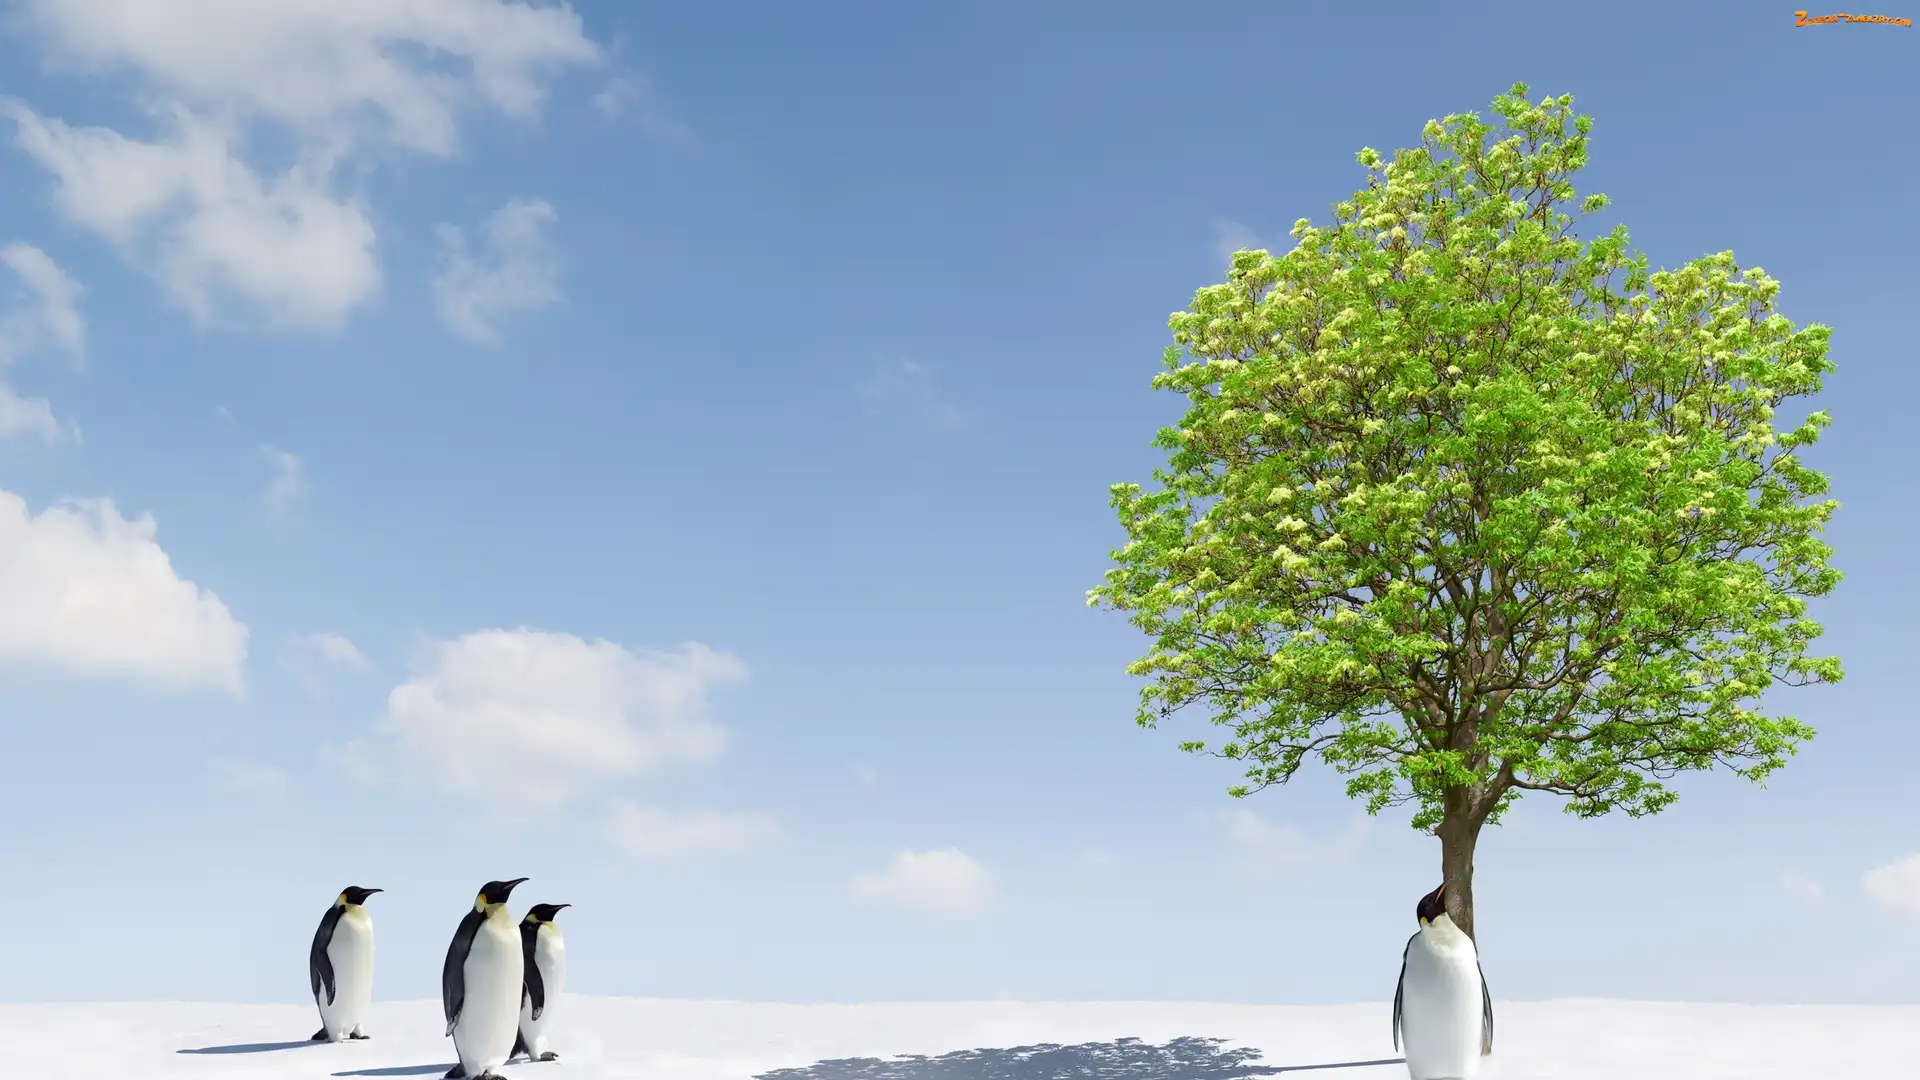 Pingwiny, Drzewo